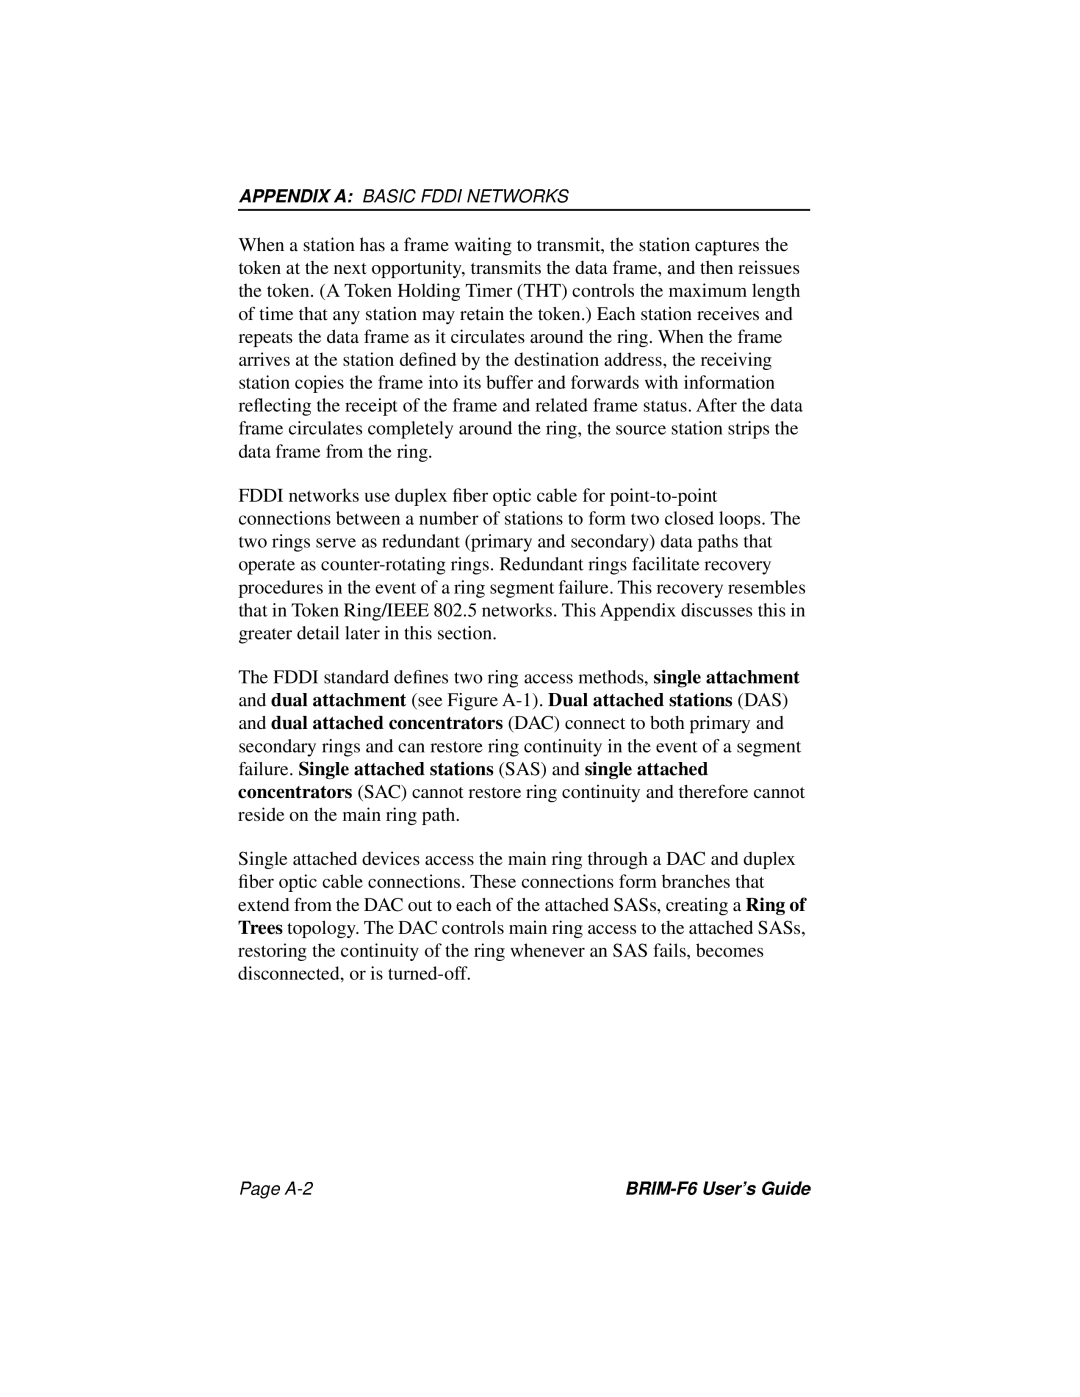 Cabletron Systems BRIM-F6 manual Appendix A Basic Fddi Networks, Page A-2 